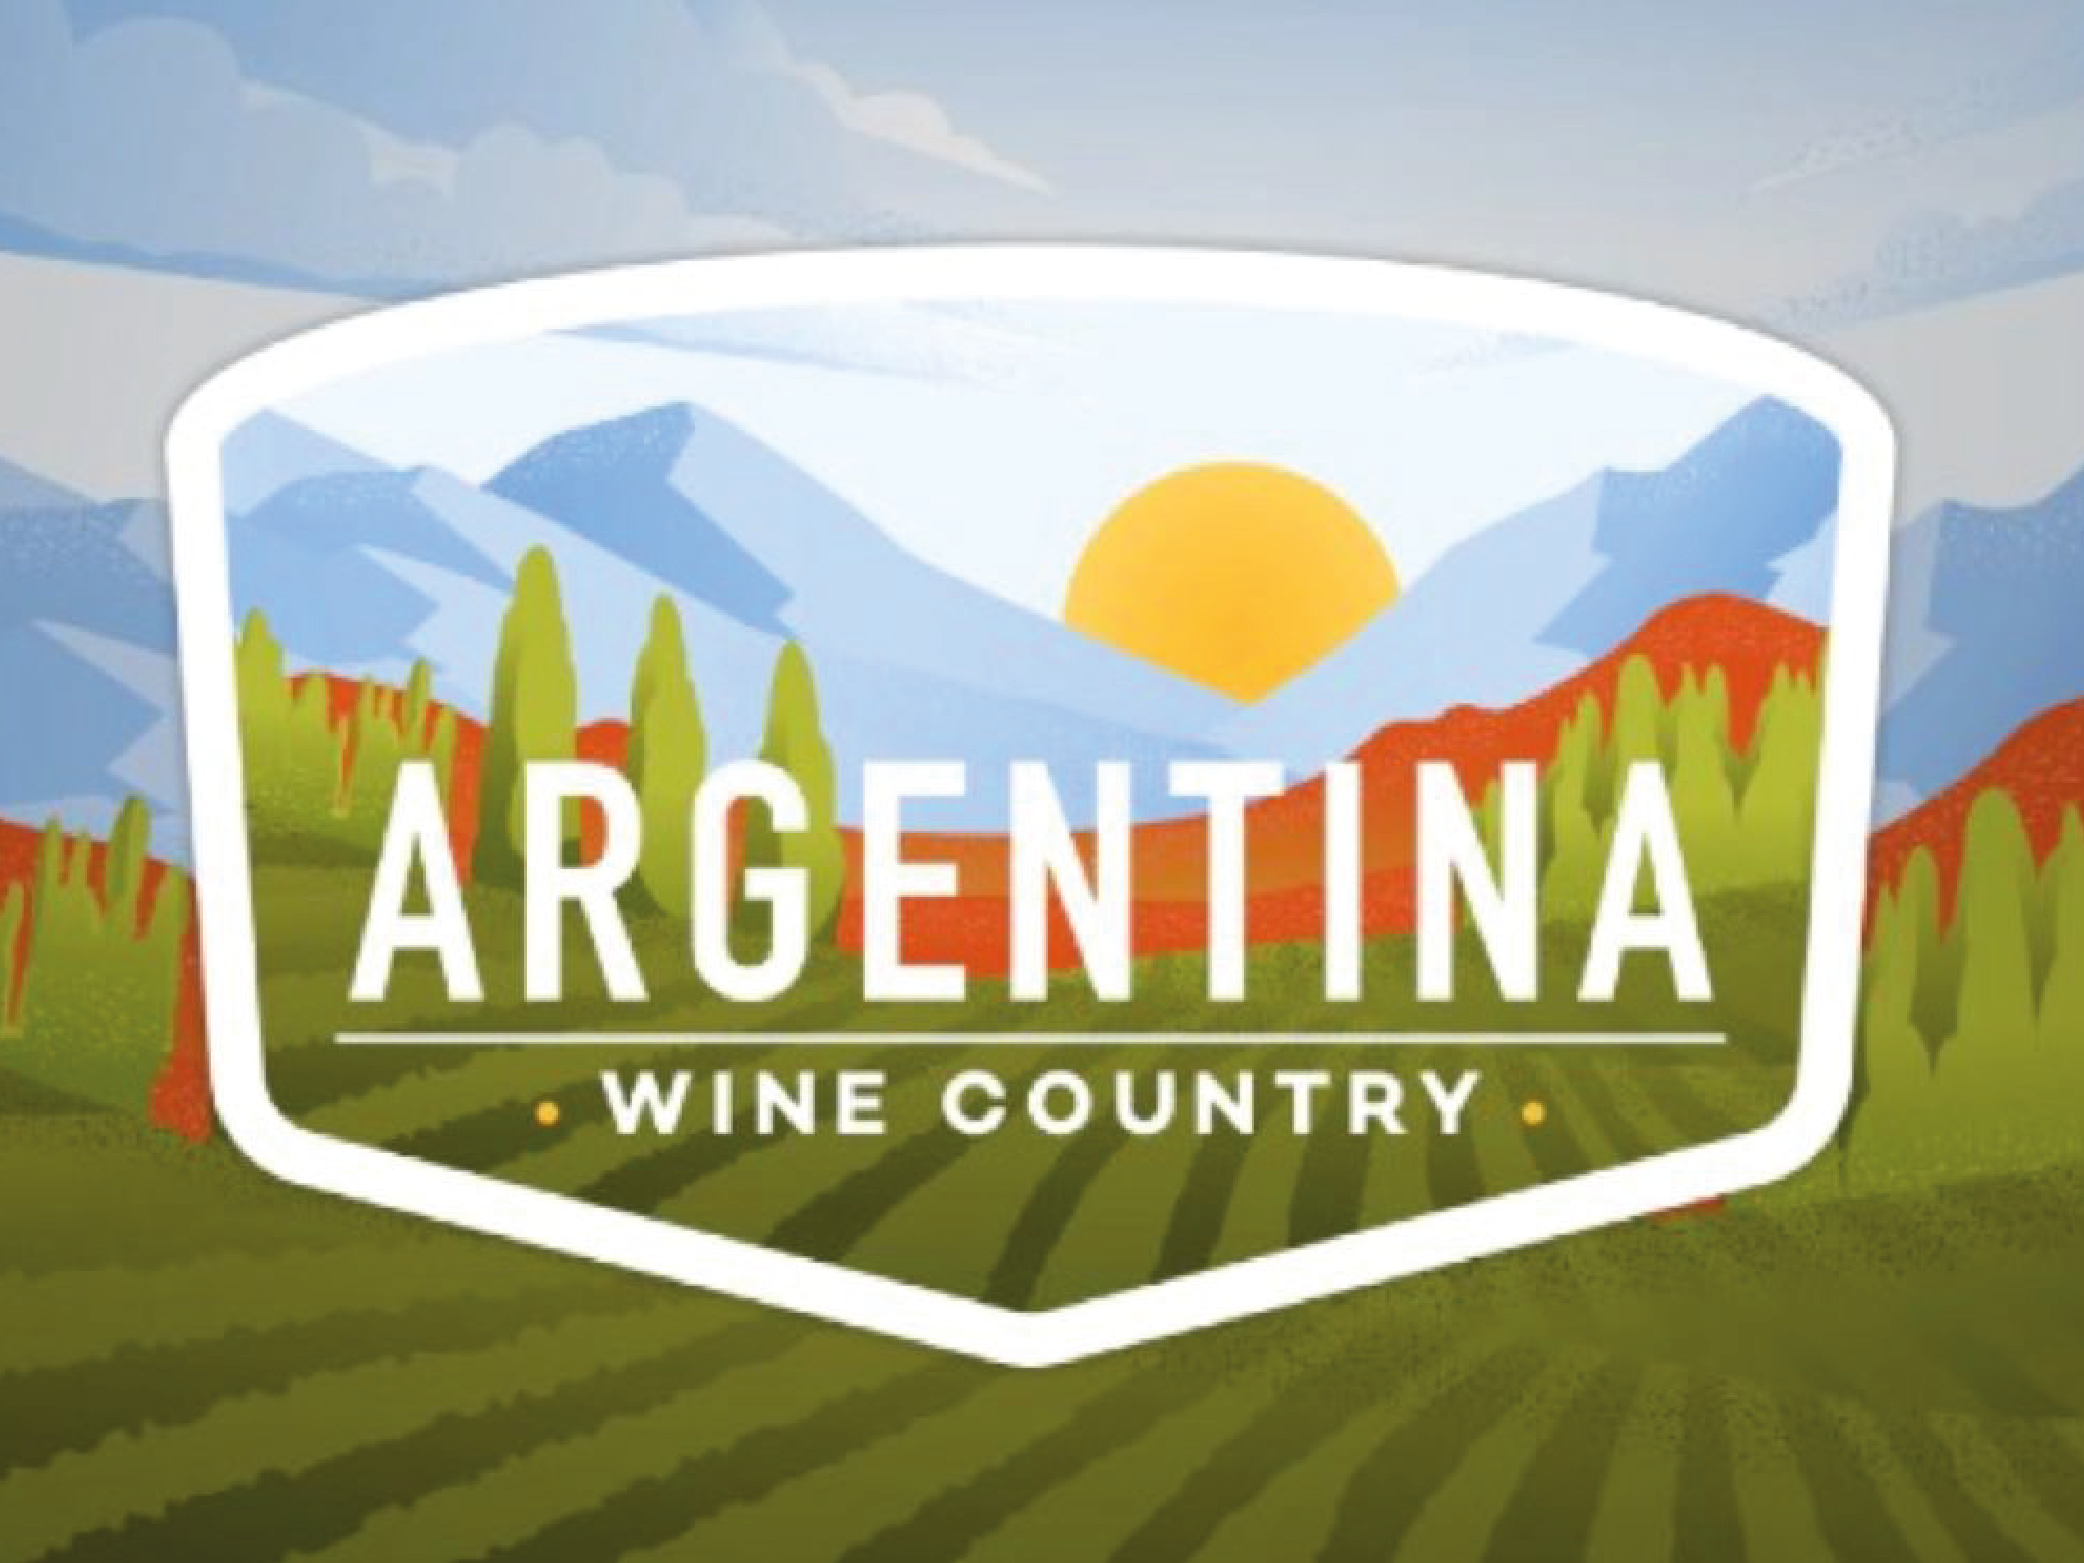 ARGENTINA WINE GUIDE